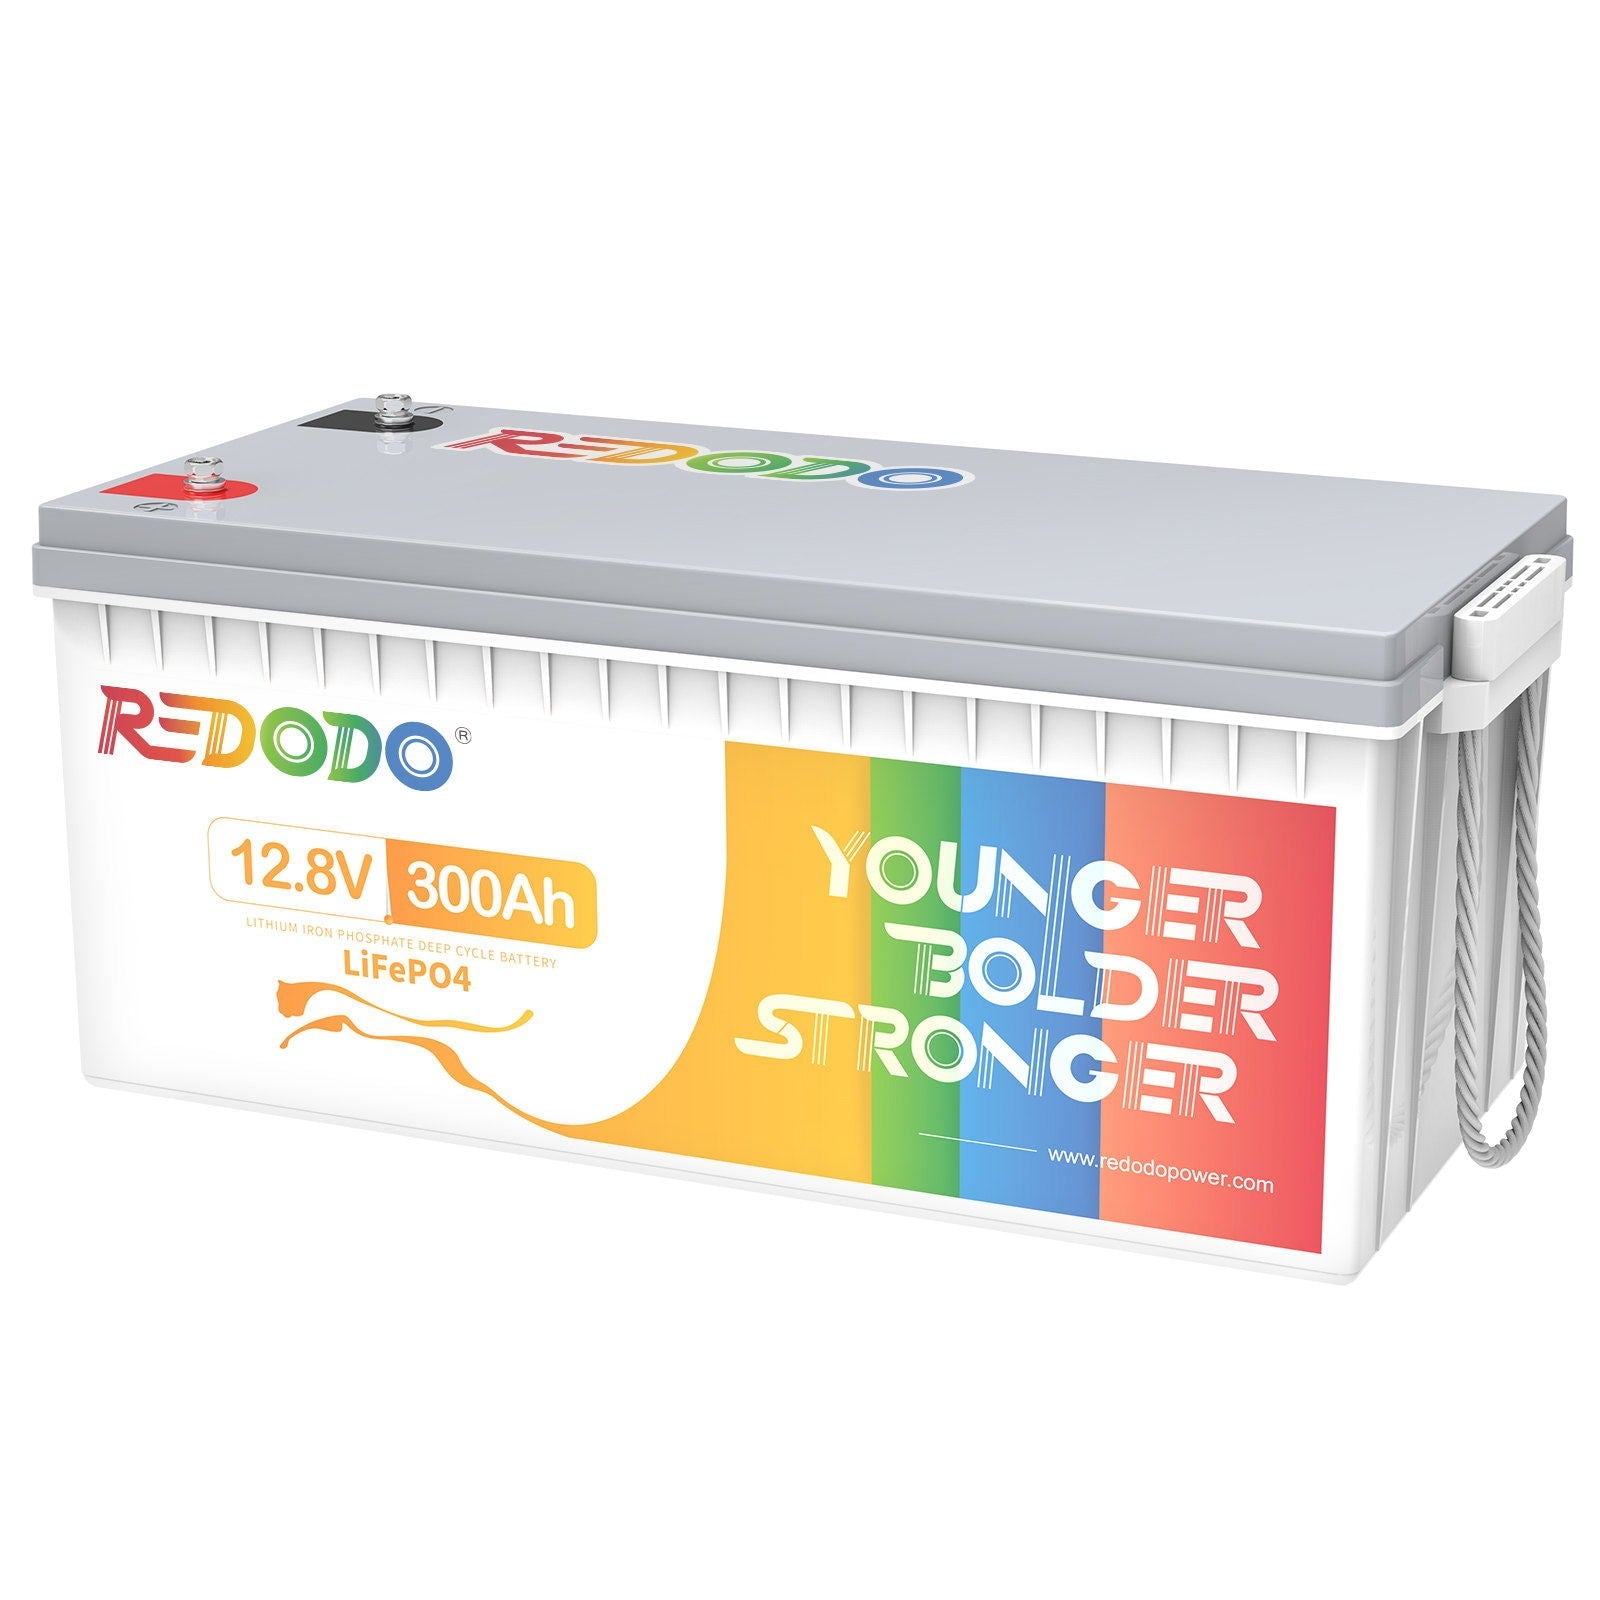 Redodo 12V 300Ah Lithium Battery, Larger Capacity